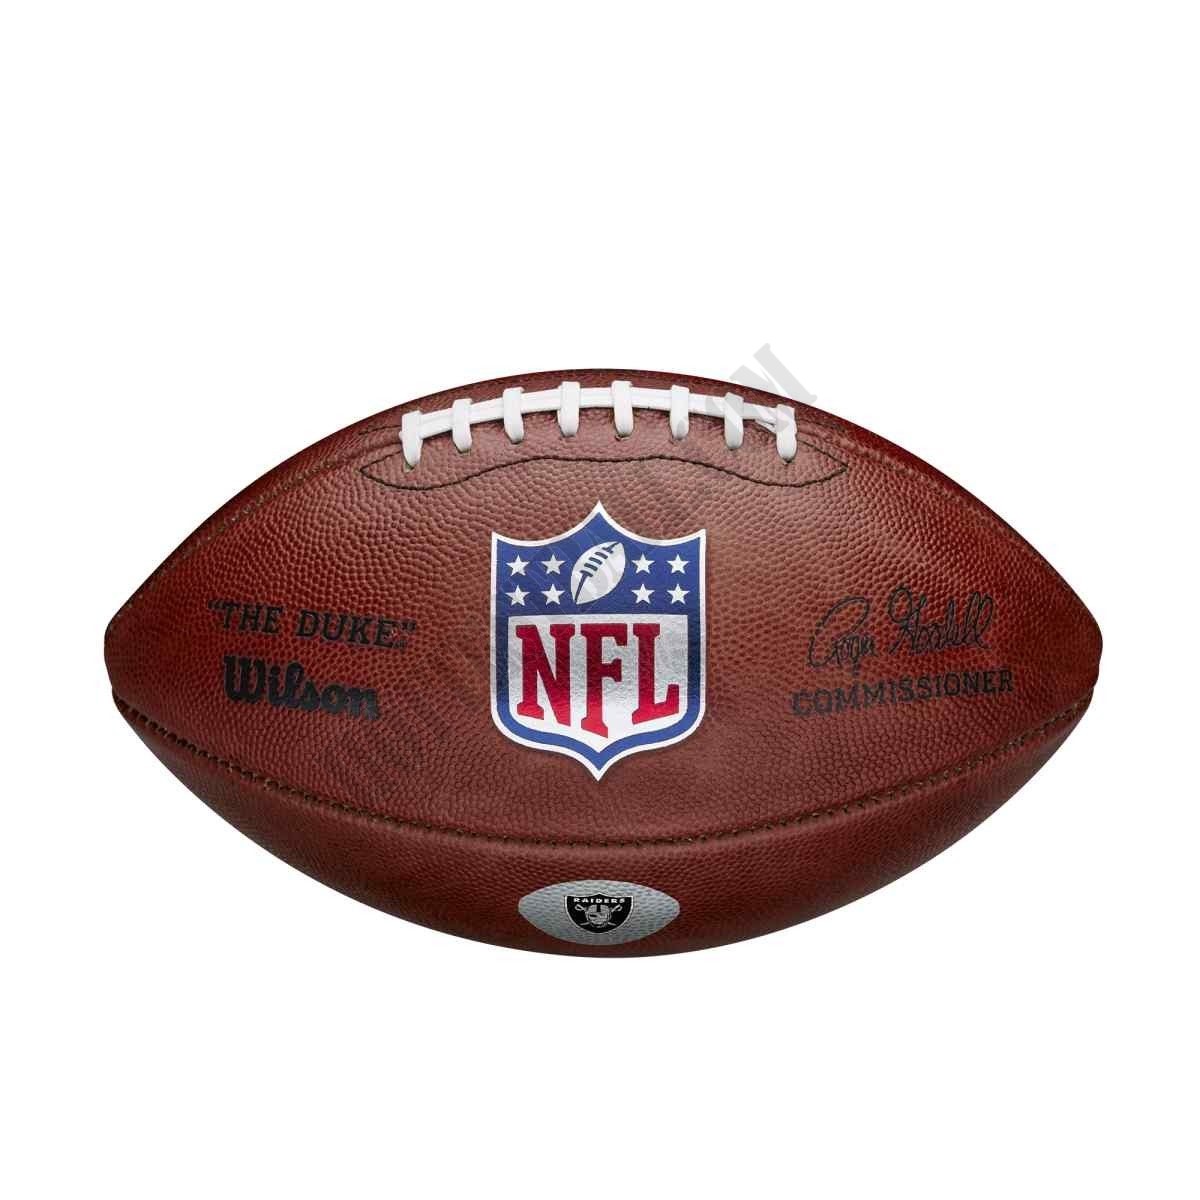 The Duke Decal NFL Football - Las Vegas Raiders - Wilson Discount Store - -1